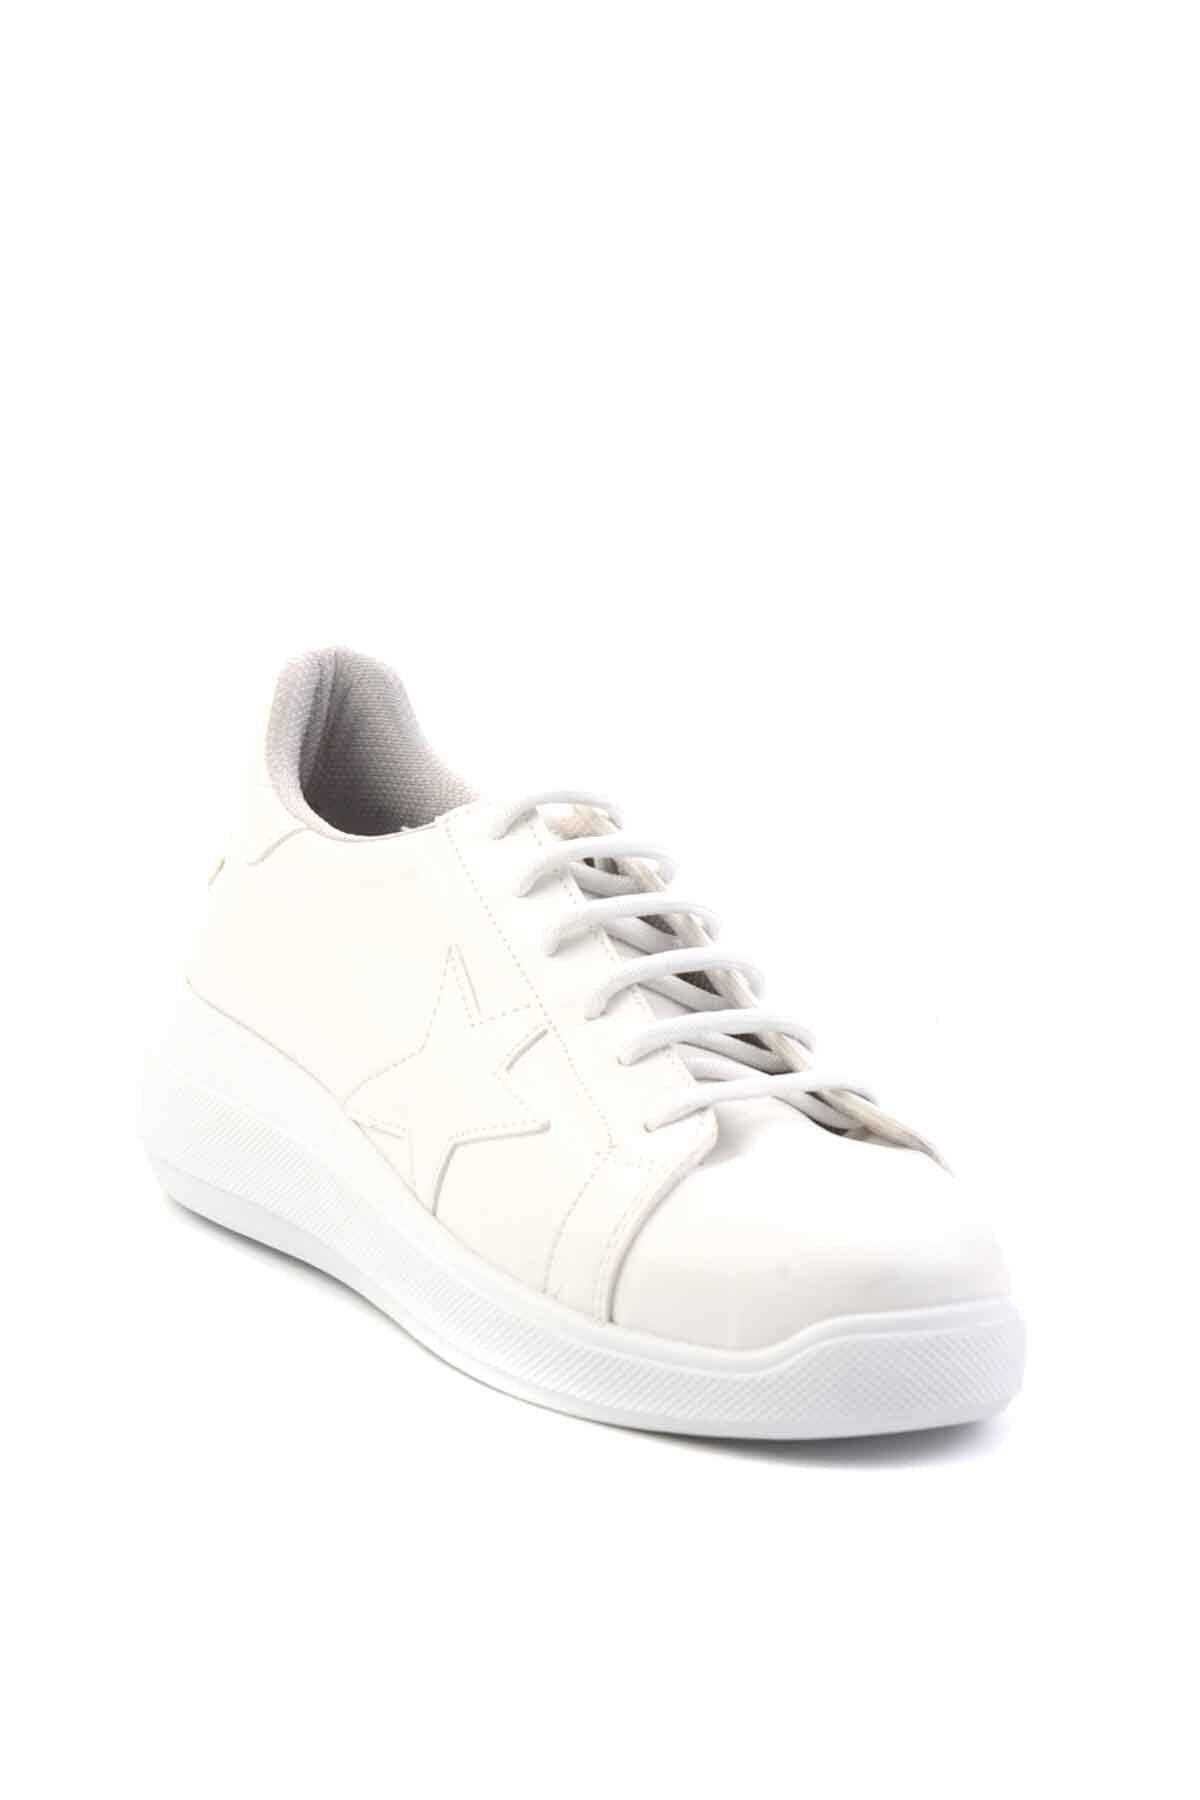 خرید پستی کفش اسپرت زنانه جدید برند Bambi Beyaz/Beyaz-09 ty88742791